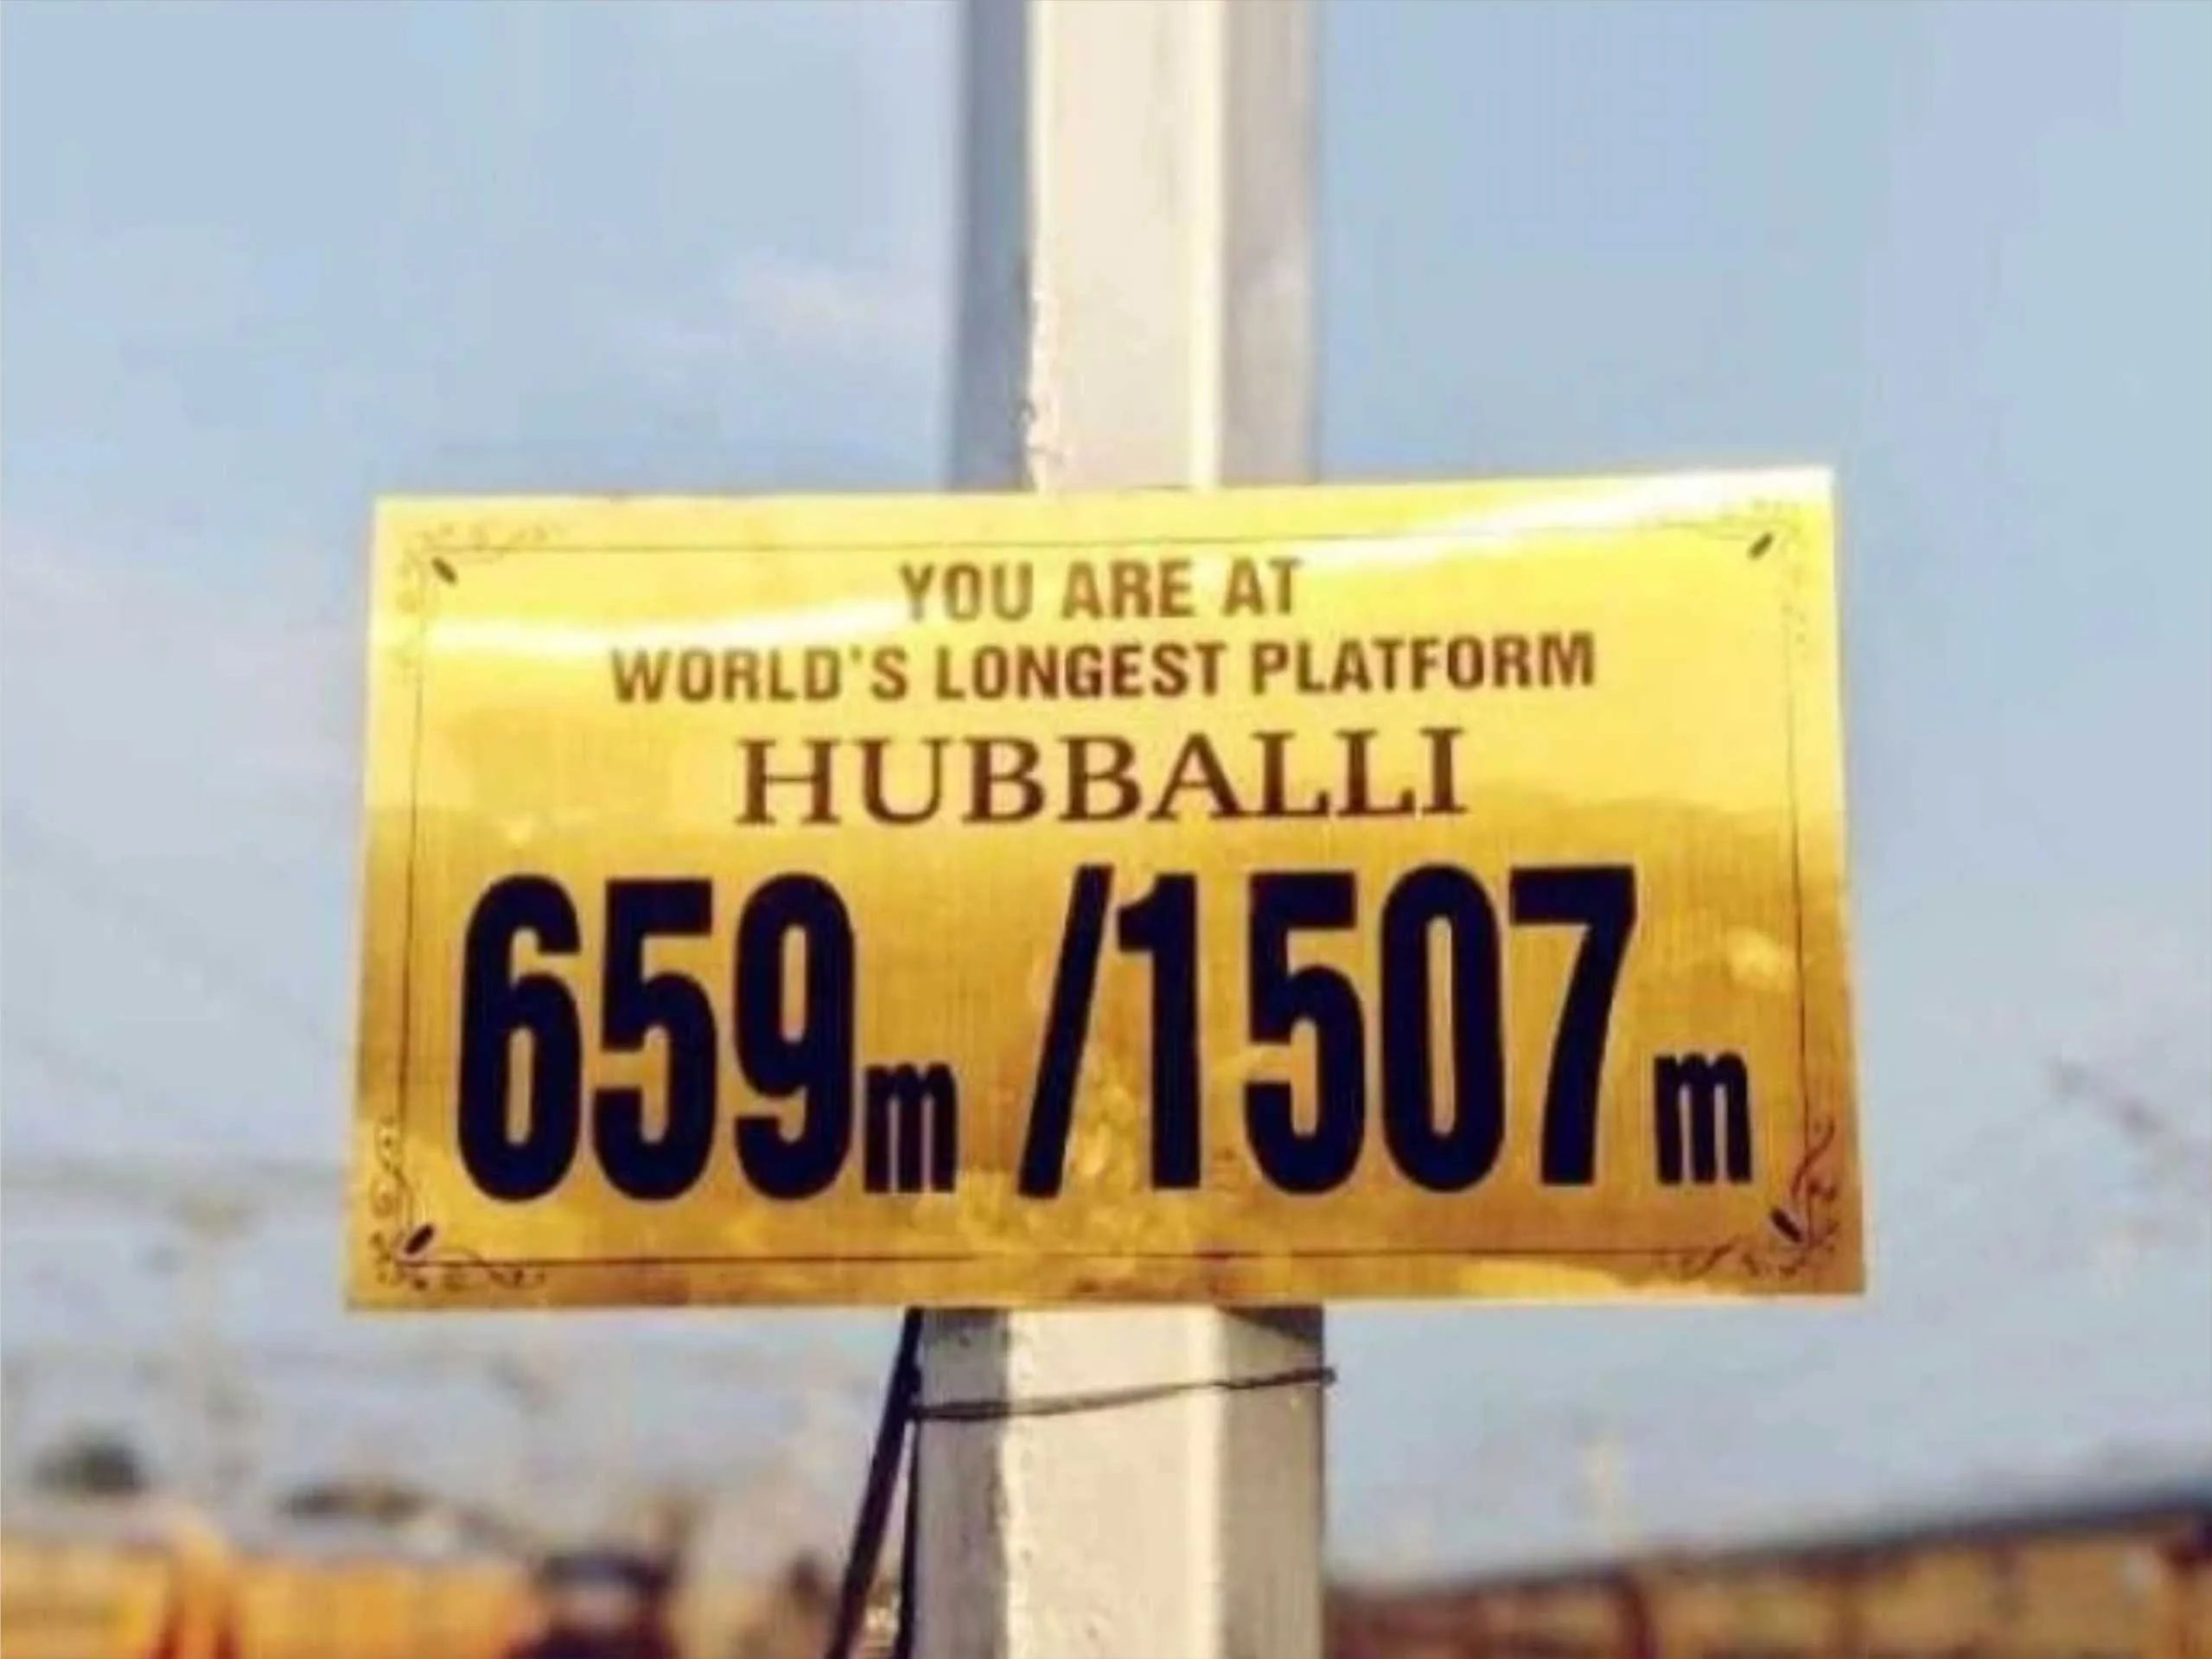 World's longest platform